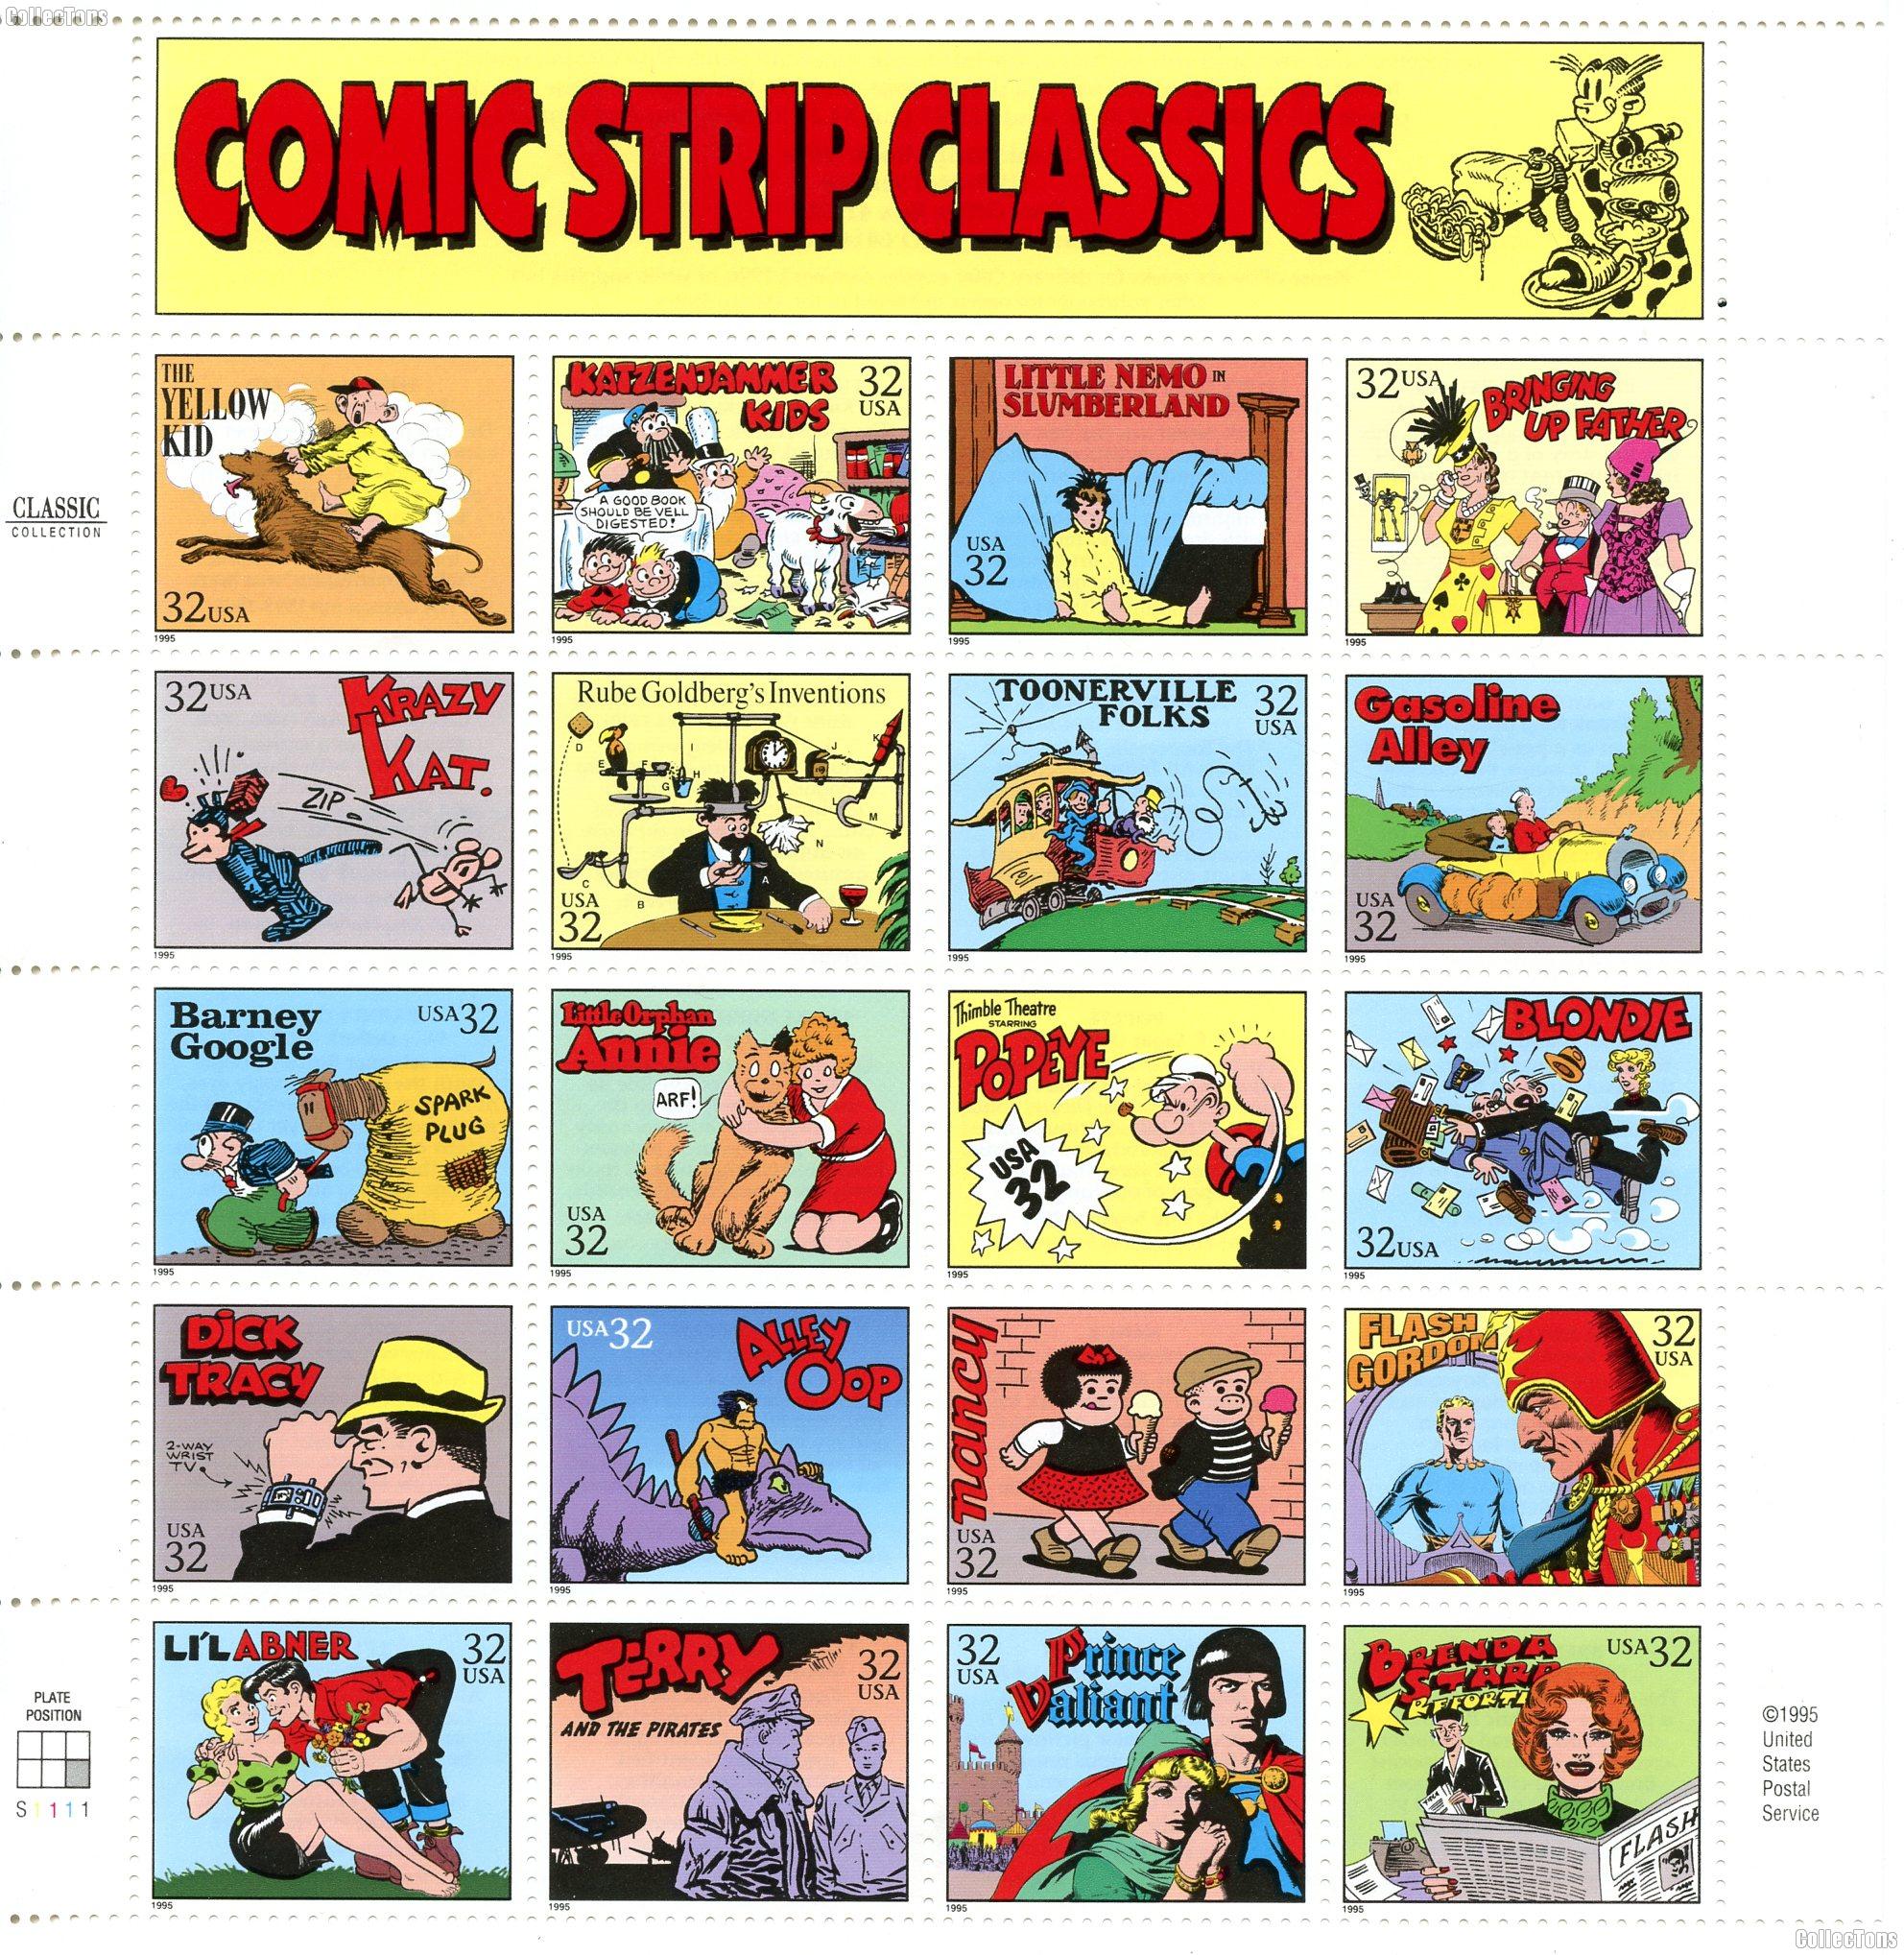 1995 Comic Strips 32 Cent US Postage Stamp MNH Sheet of 20 Scott #3000